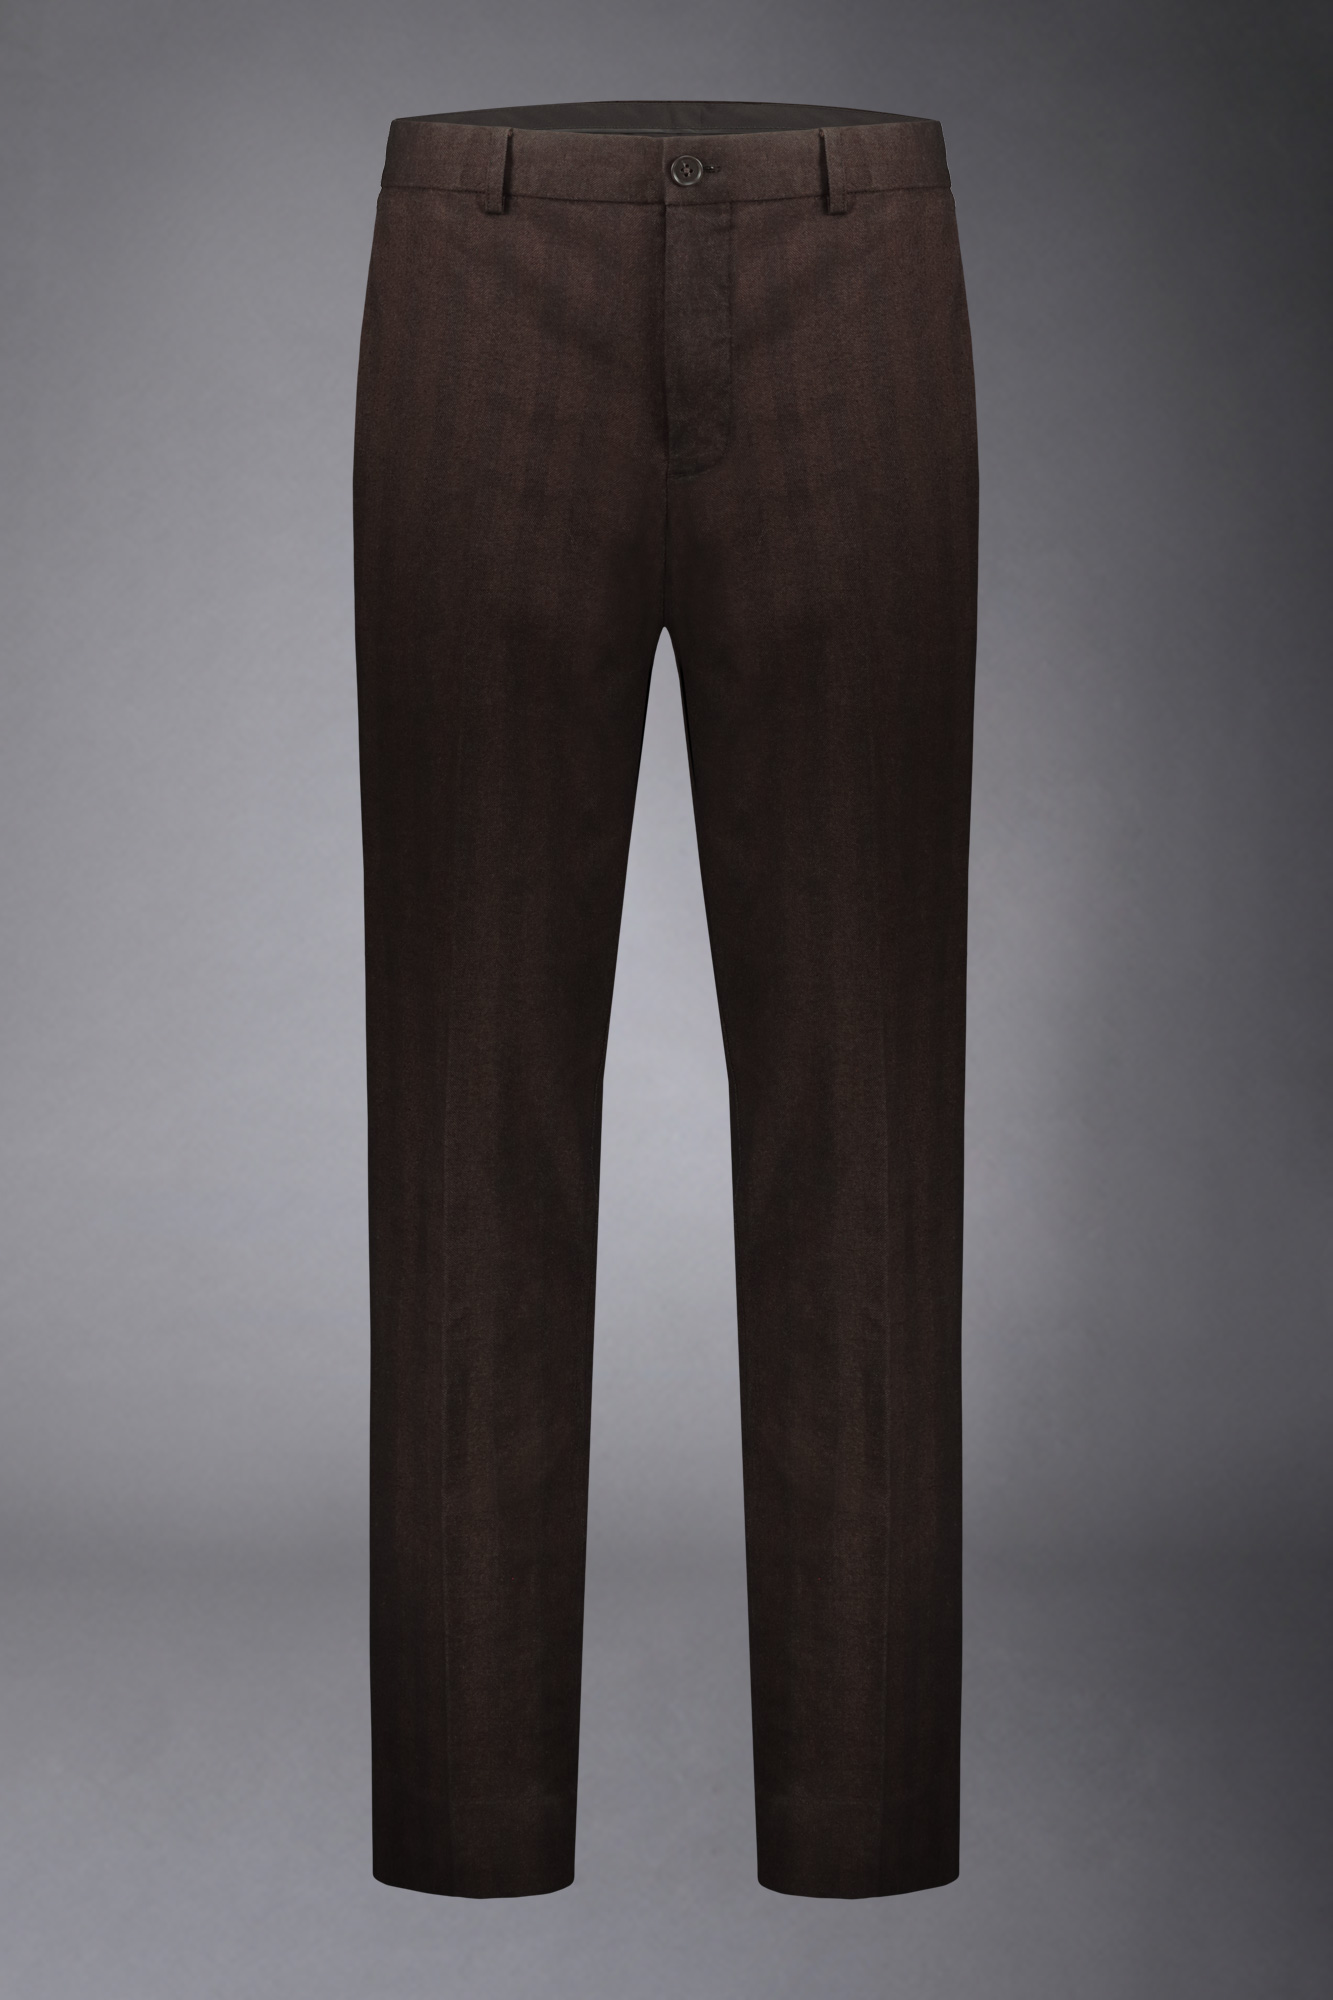 Pantalone uomo senza pinces in cotone stretch tessuto lavato disegno herringbone regular fit image number null